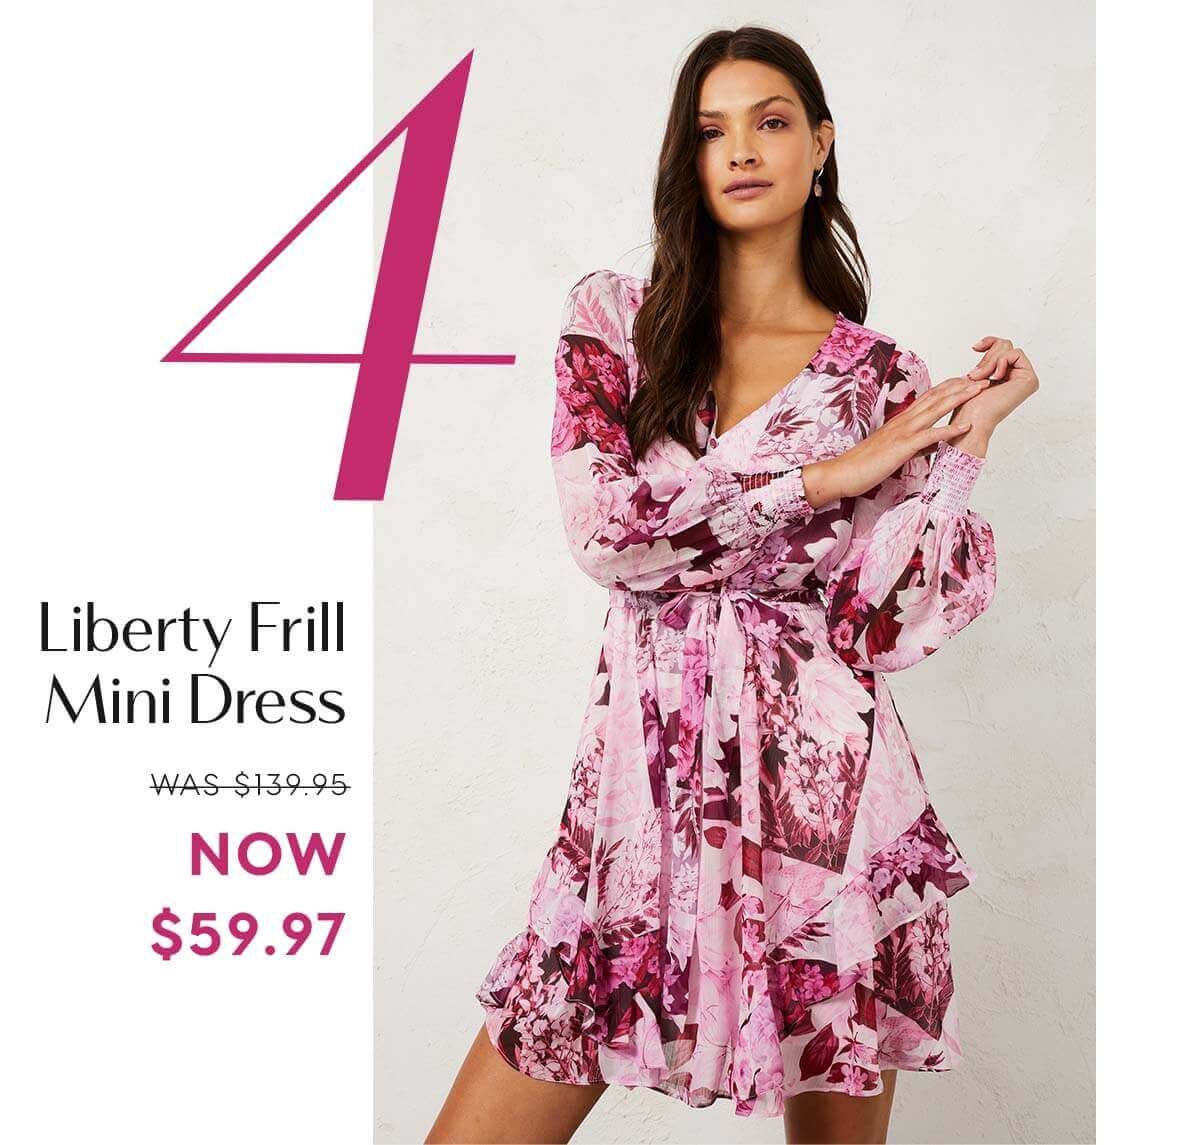 4. Liberty mini dress was $139.95 now $59.97